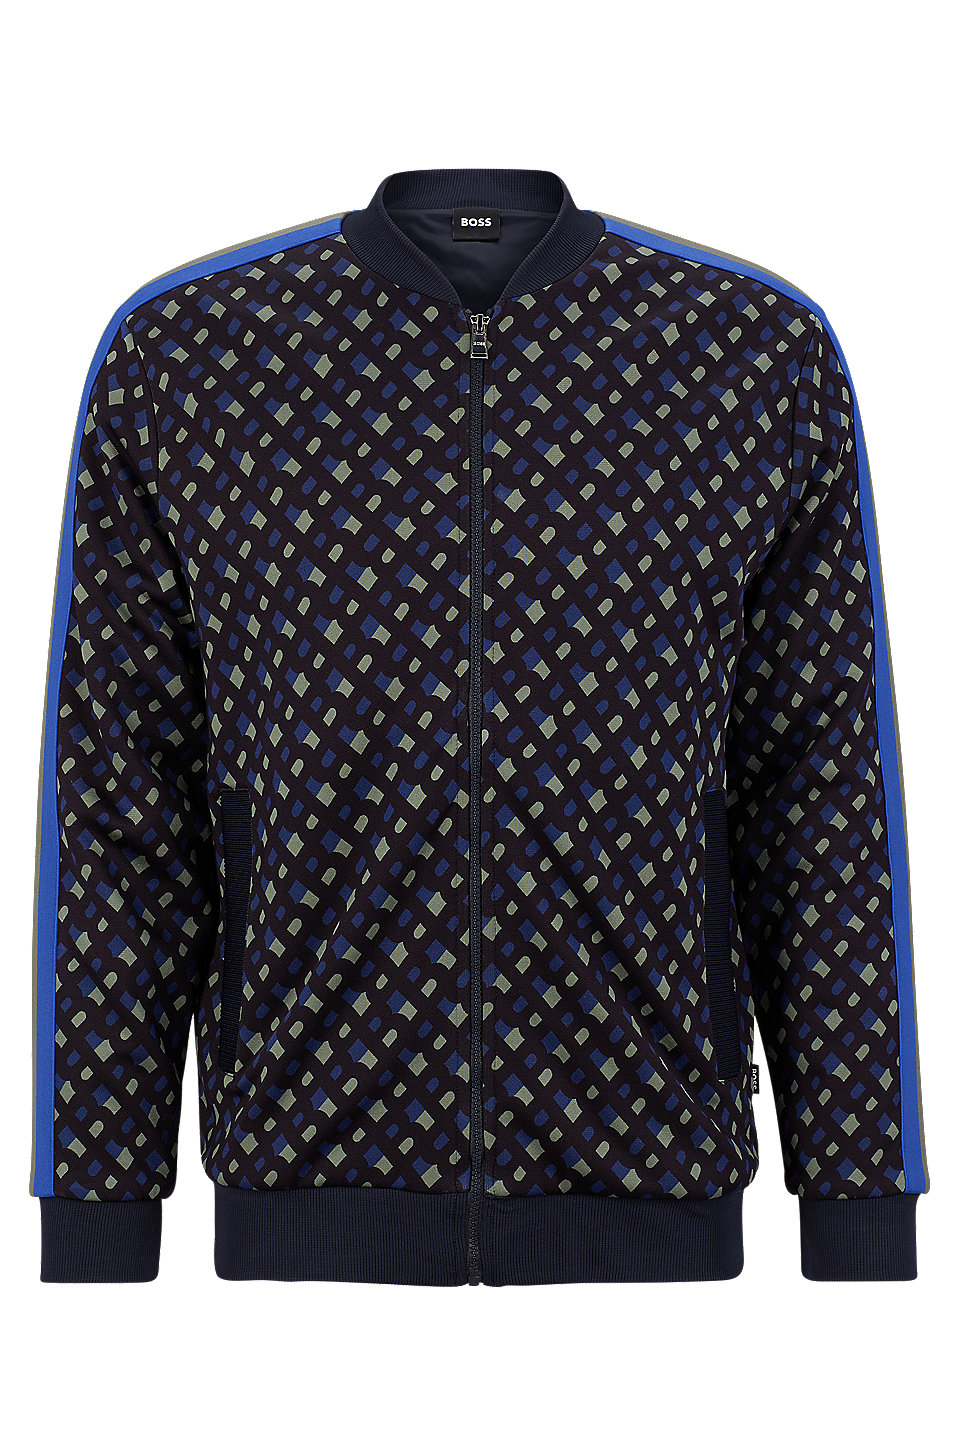 Boss Men's Zip-Up Sweatshirt with Monogram Print - Dark Blue - Size Large